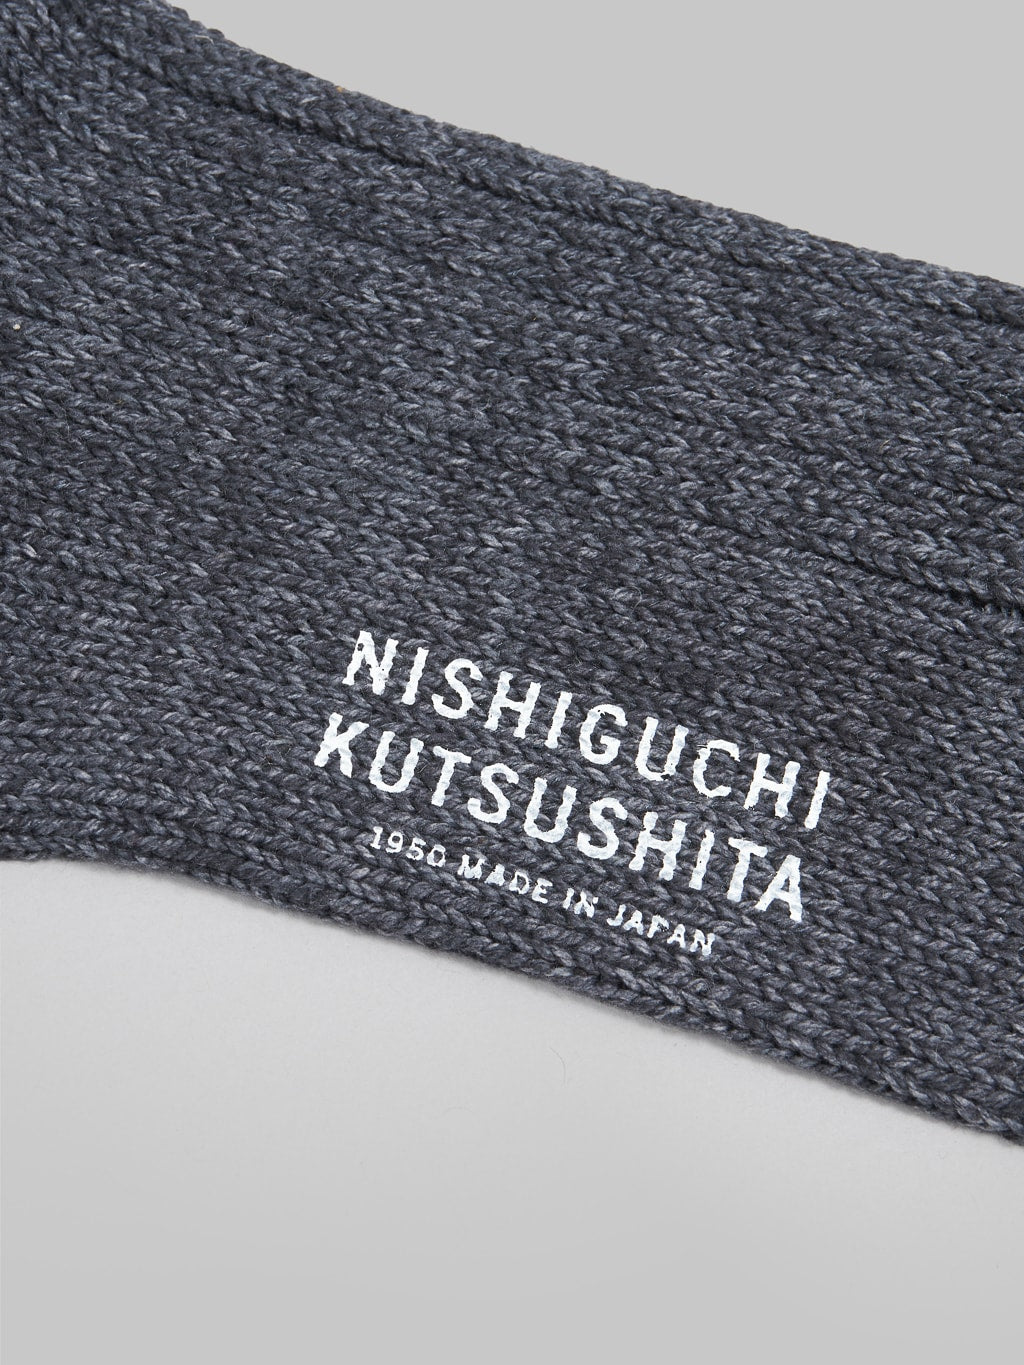 Nishiguchi Kutsushita Recycled Cotton Ribbed Socks Charcoal Brand Logo